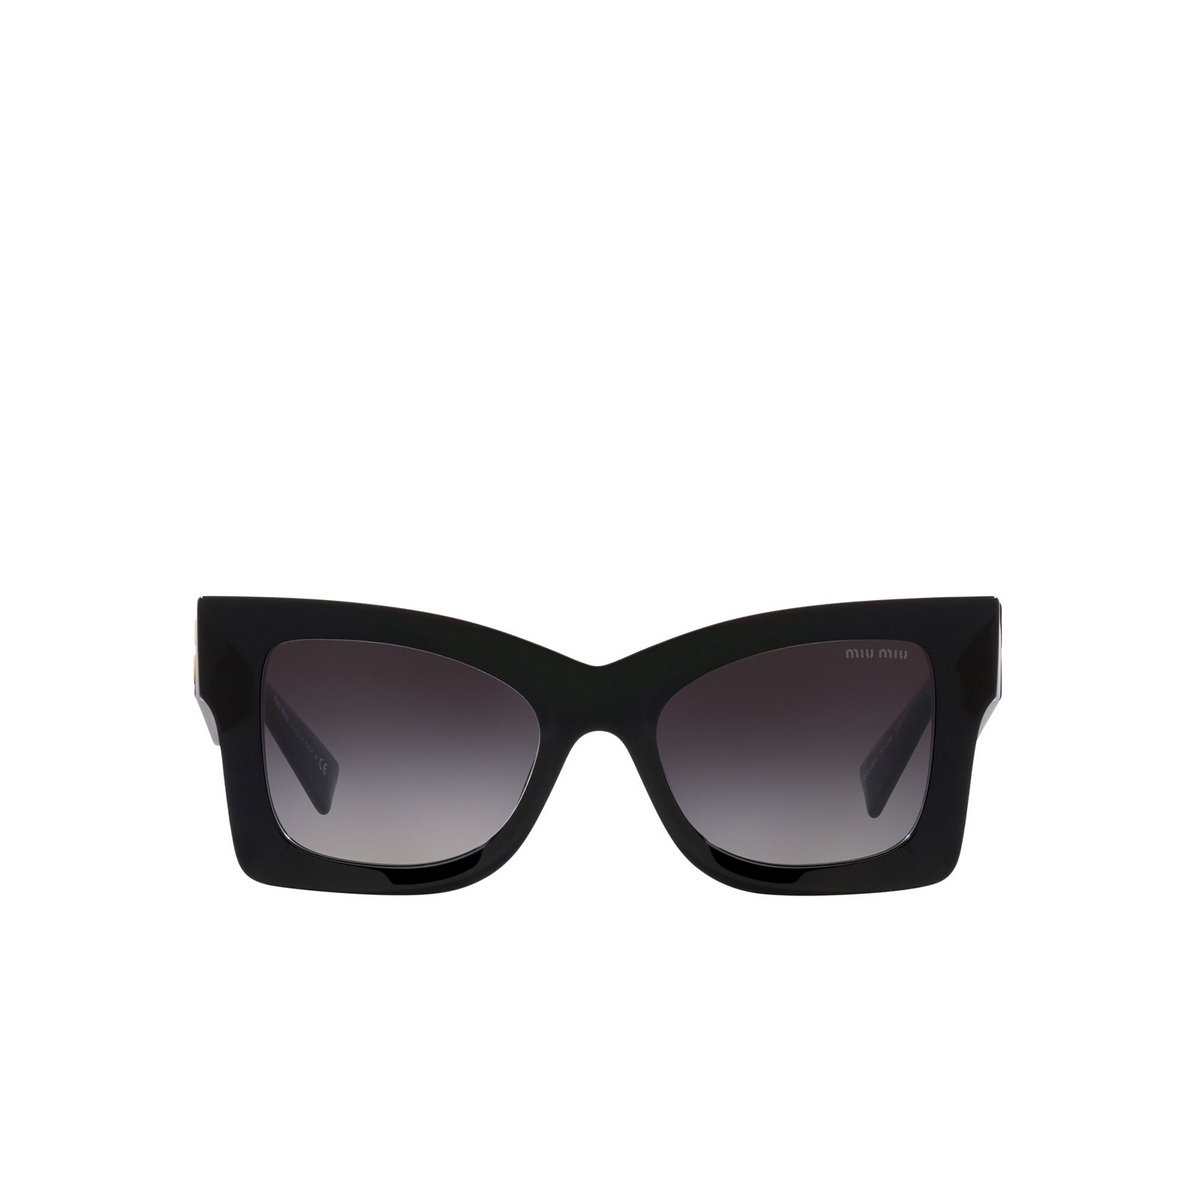 Miu Miu® Butterfly Sunglasses: MU 08WS color Black 1AB5D1 - front view.